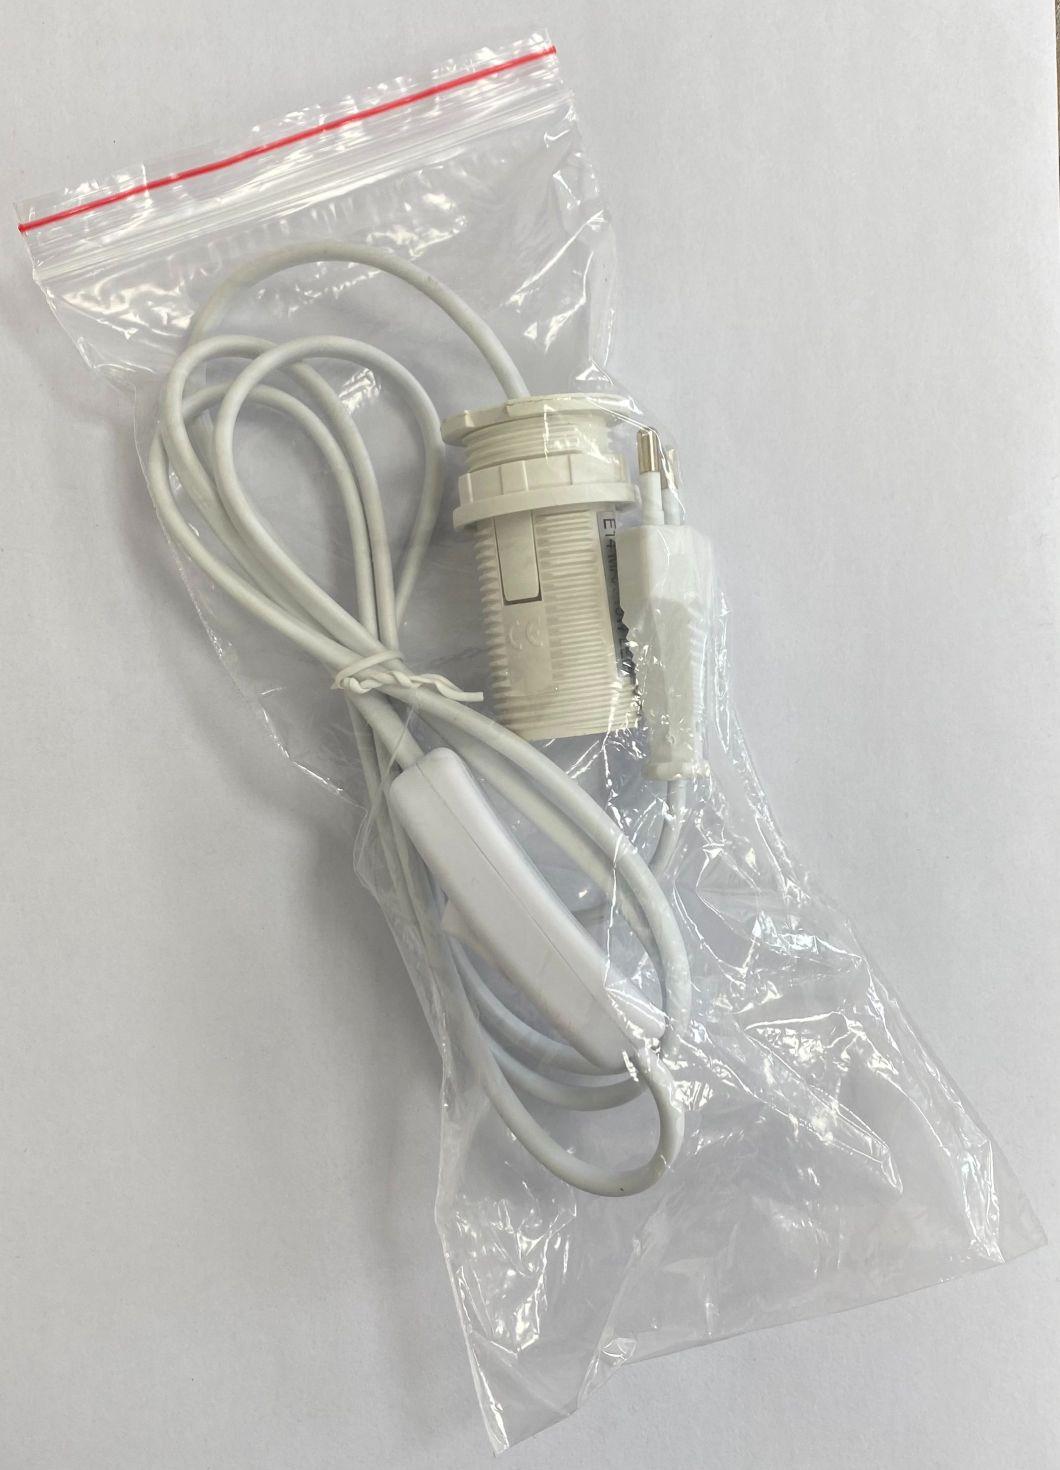 CE Approval Lamp Power Cable German 2 Core Plug E14 E27 E26 Light Stand